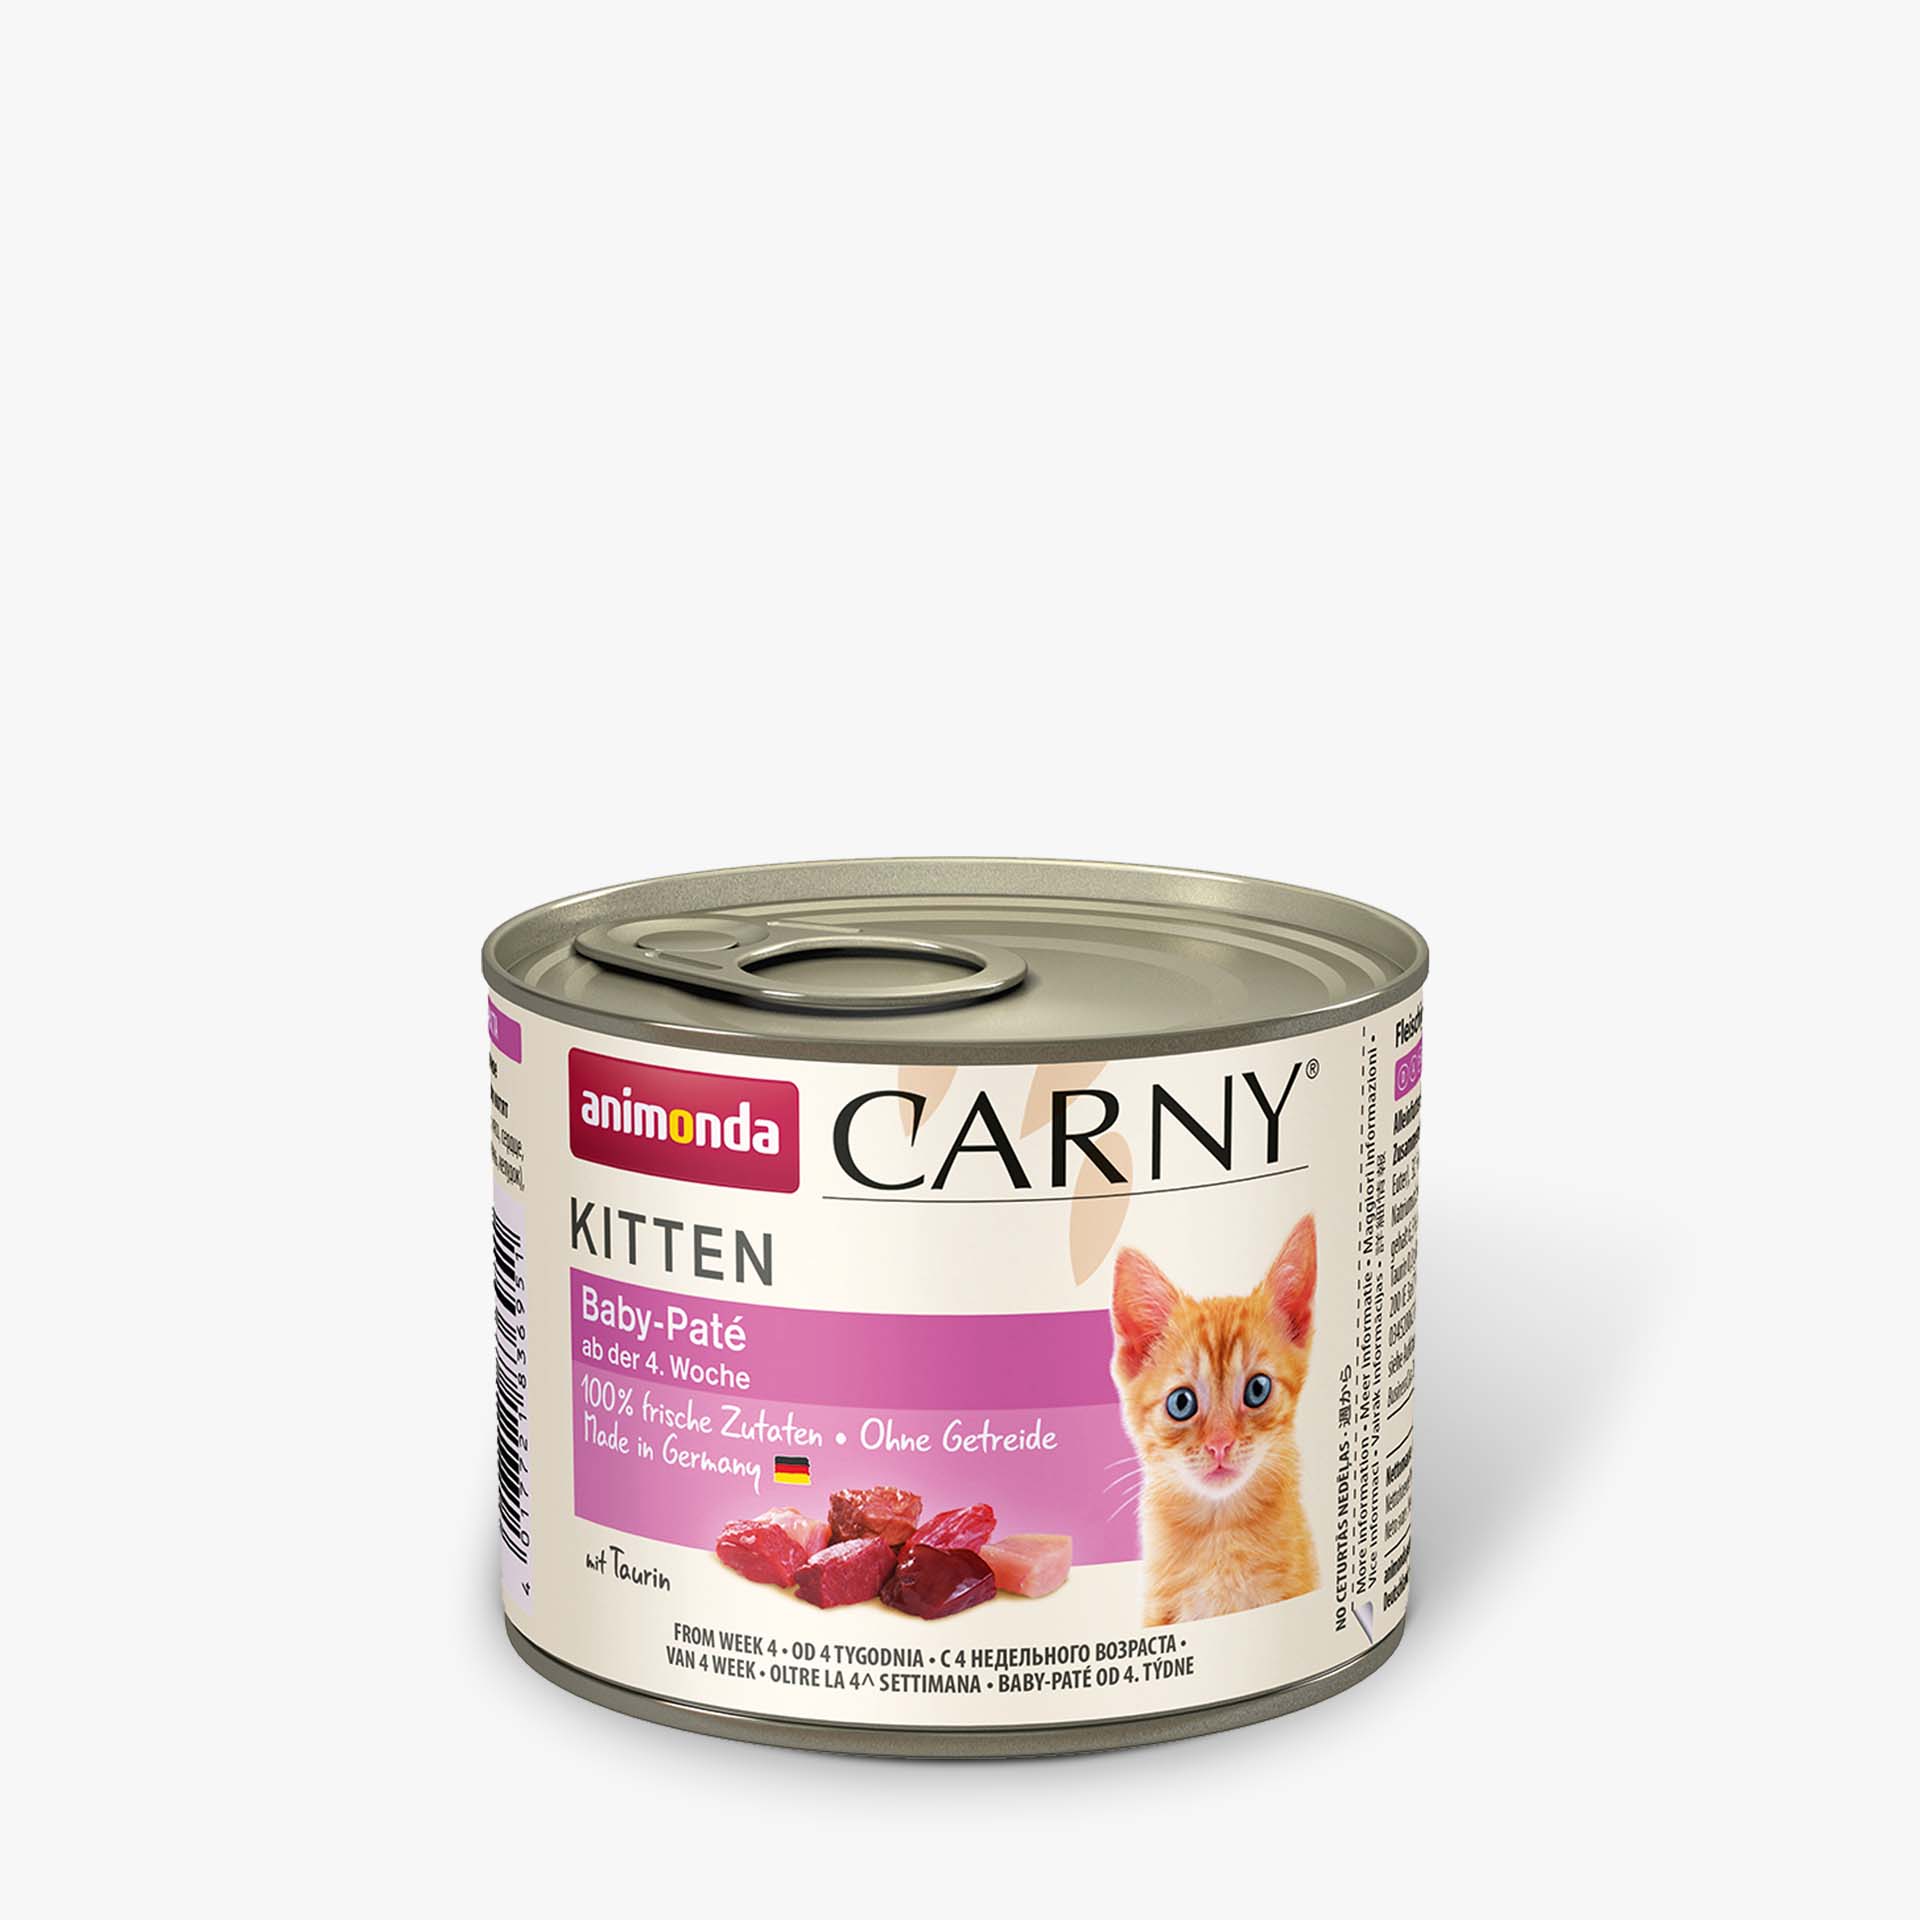 Carny Kitten Baby-Paté